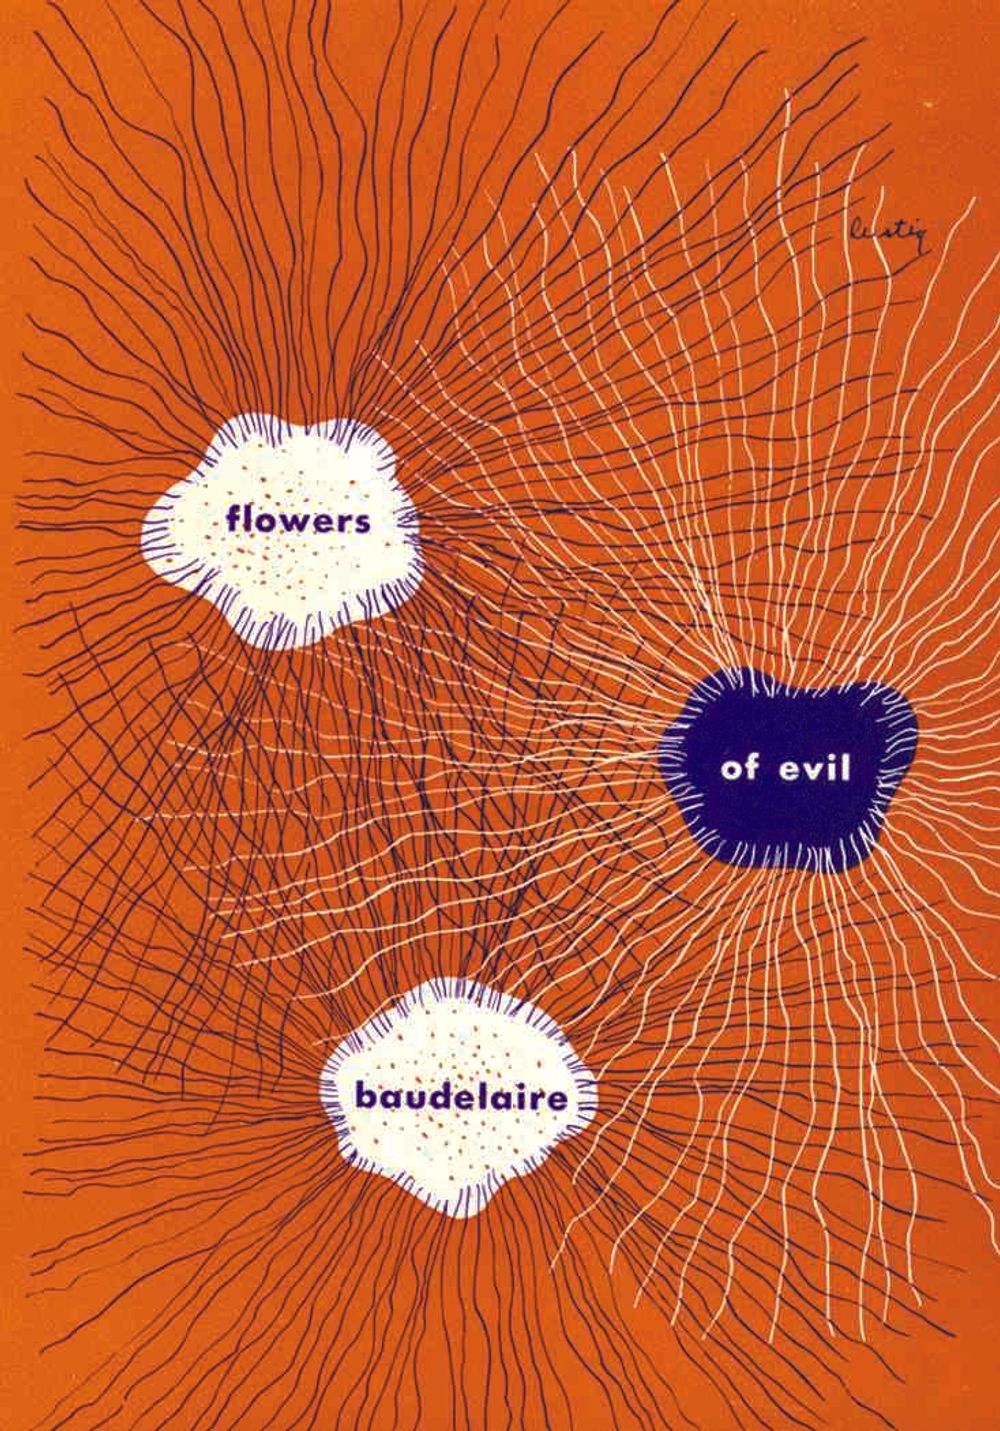 Les Fleurs du Mal by Charles Baudelaire